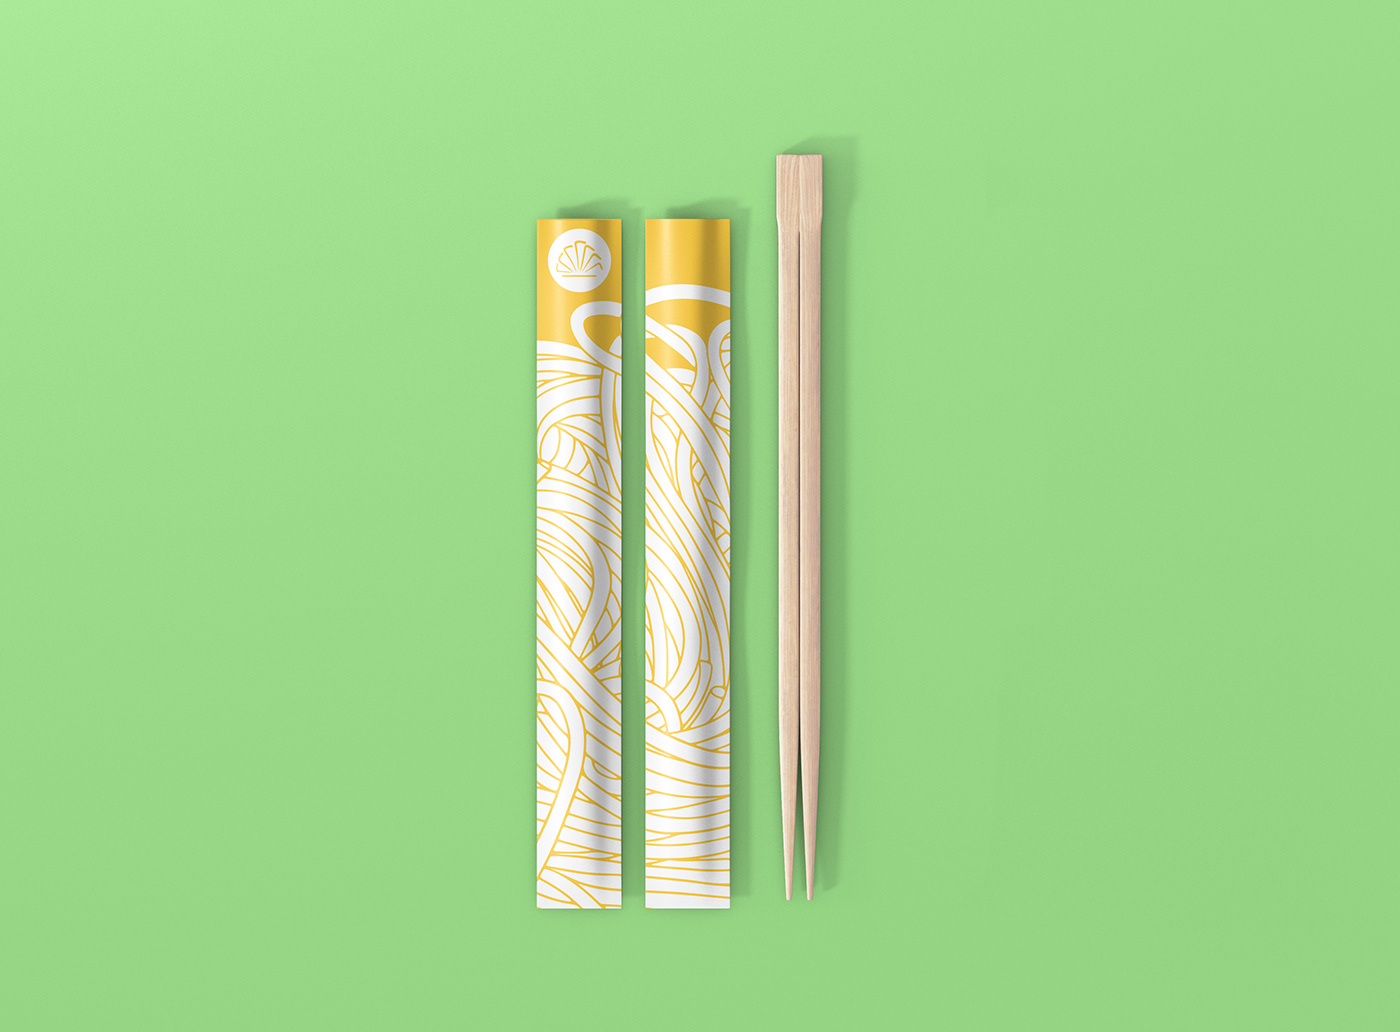 Fun noodle chopsticks design illustrations